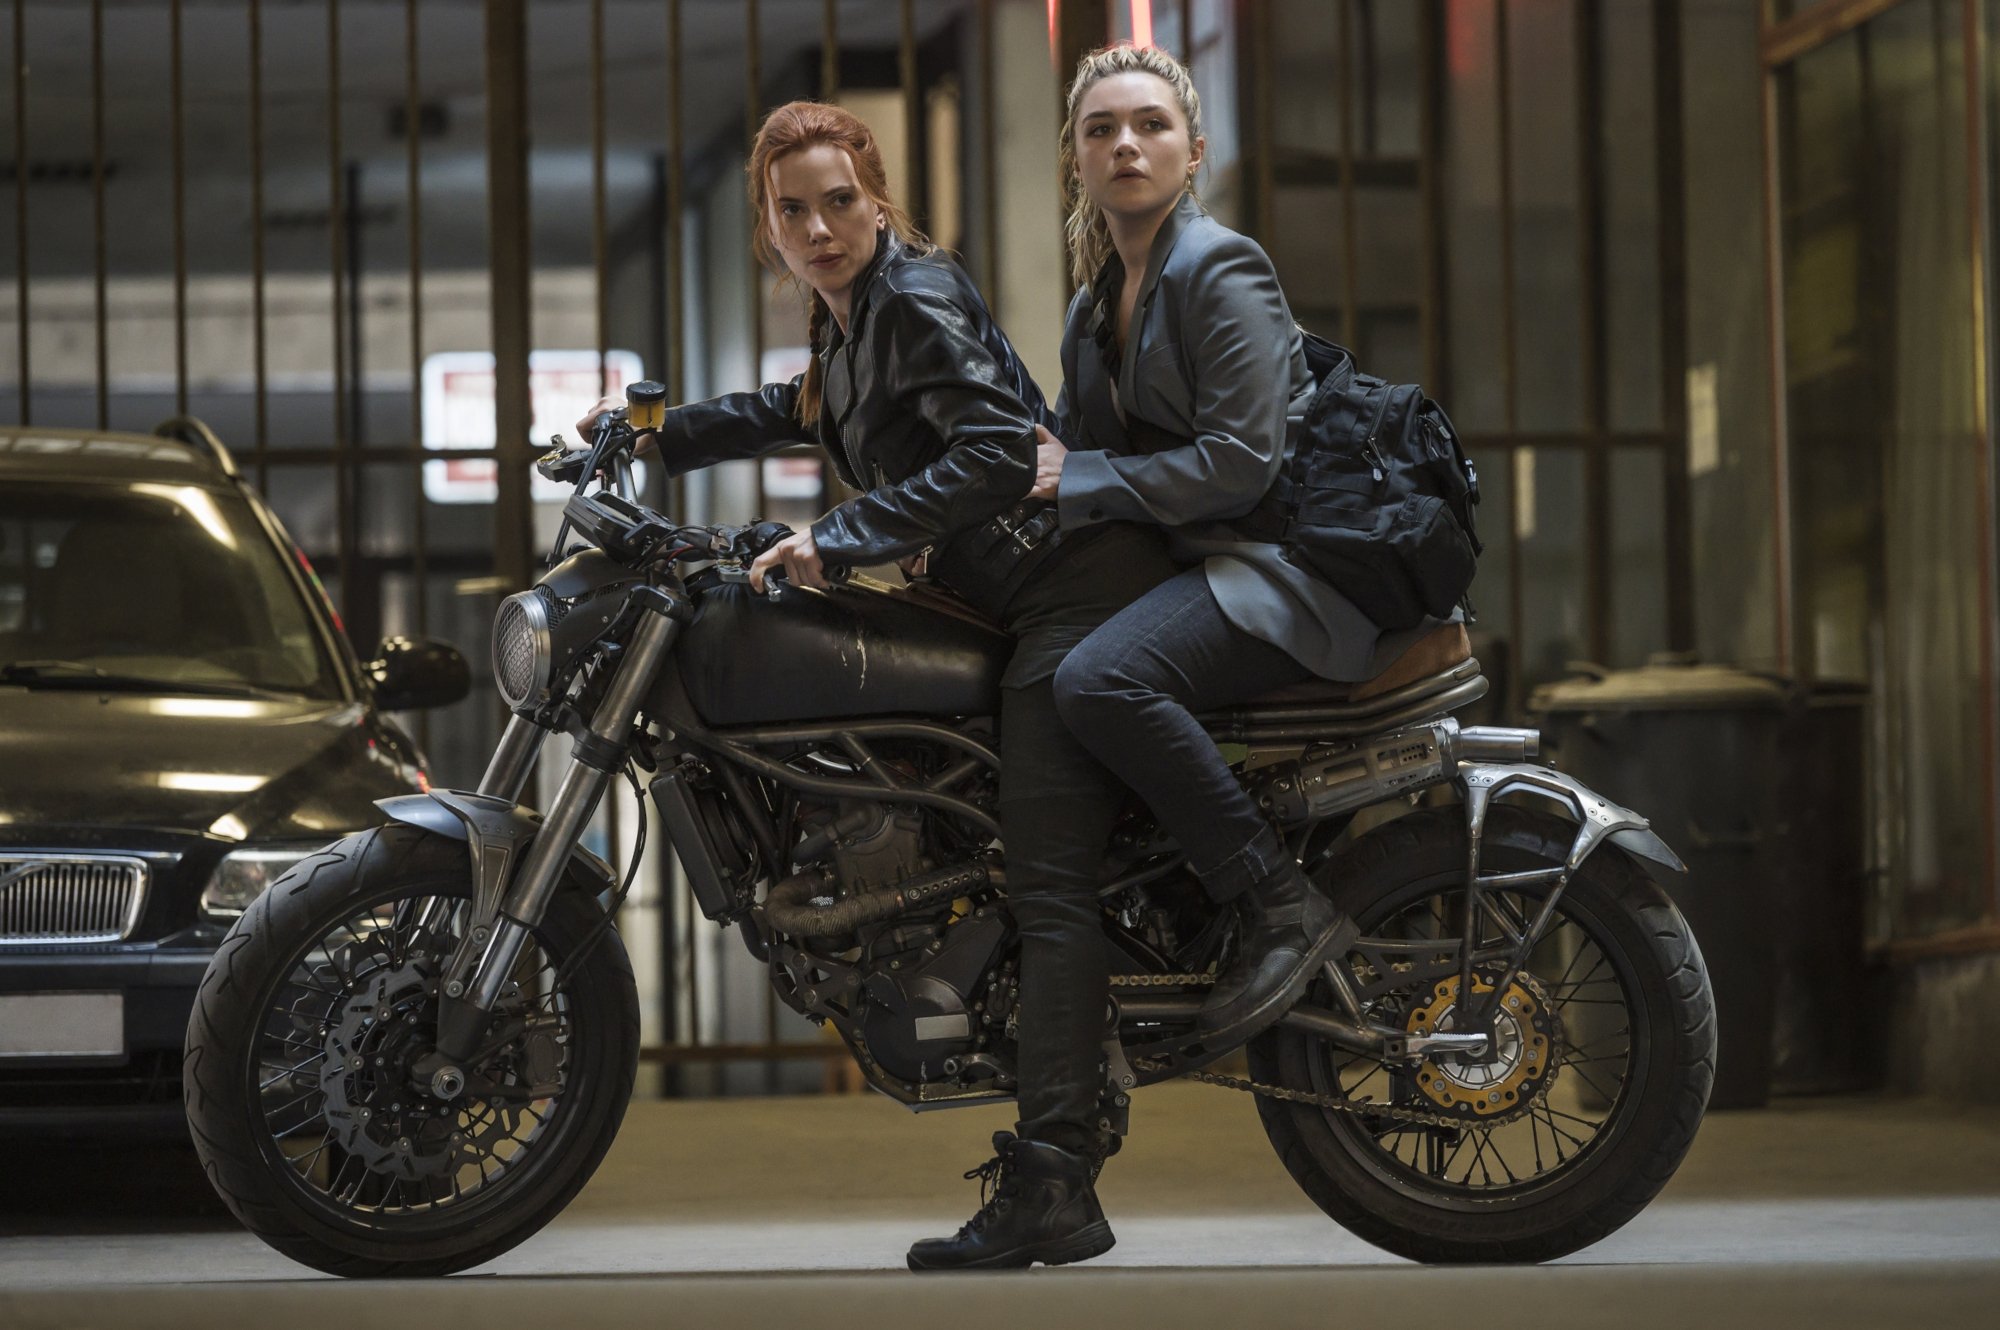 Natasha Romanoff and Yelena Belova riding a motorcycle in 'Black Widow'